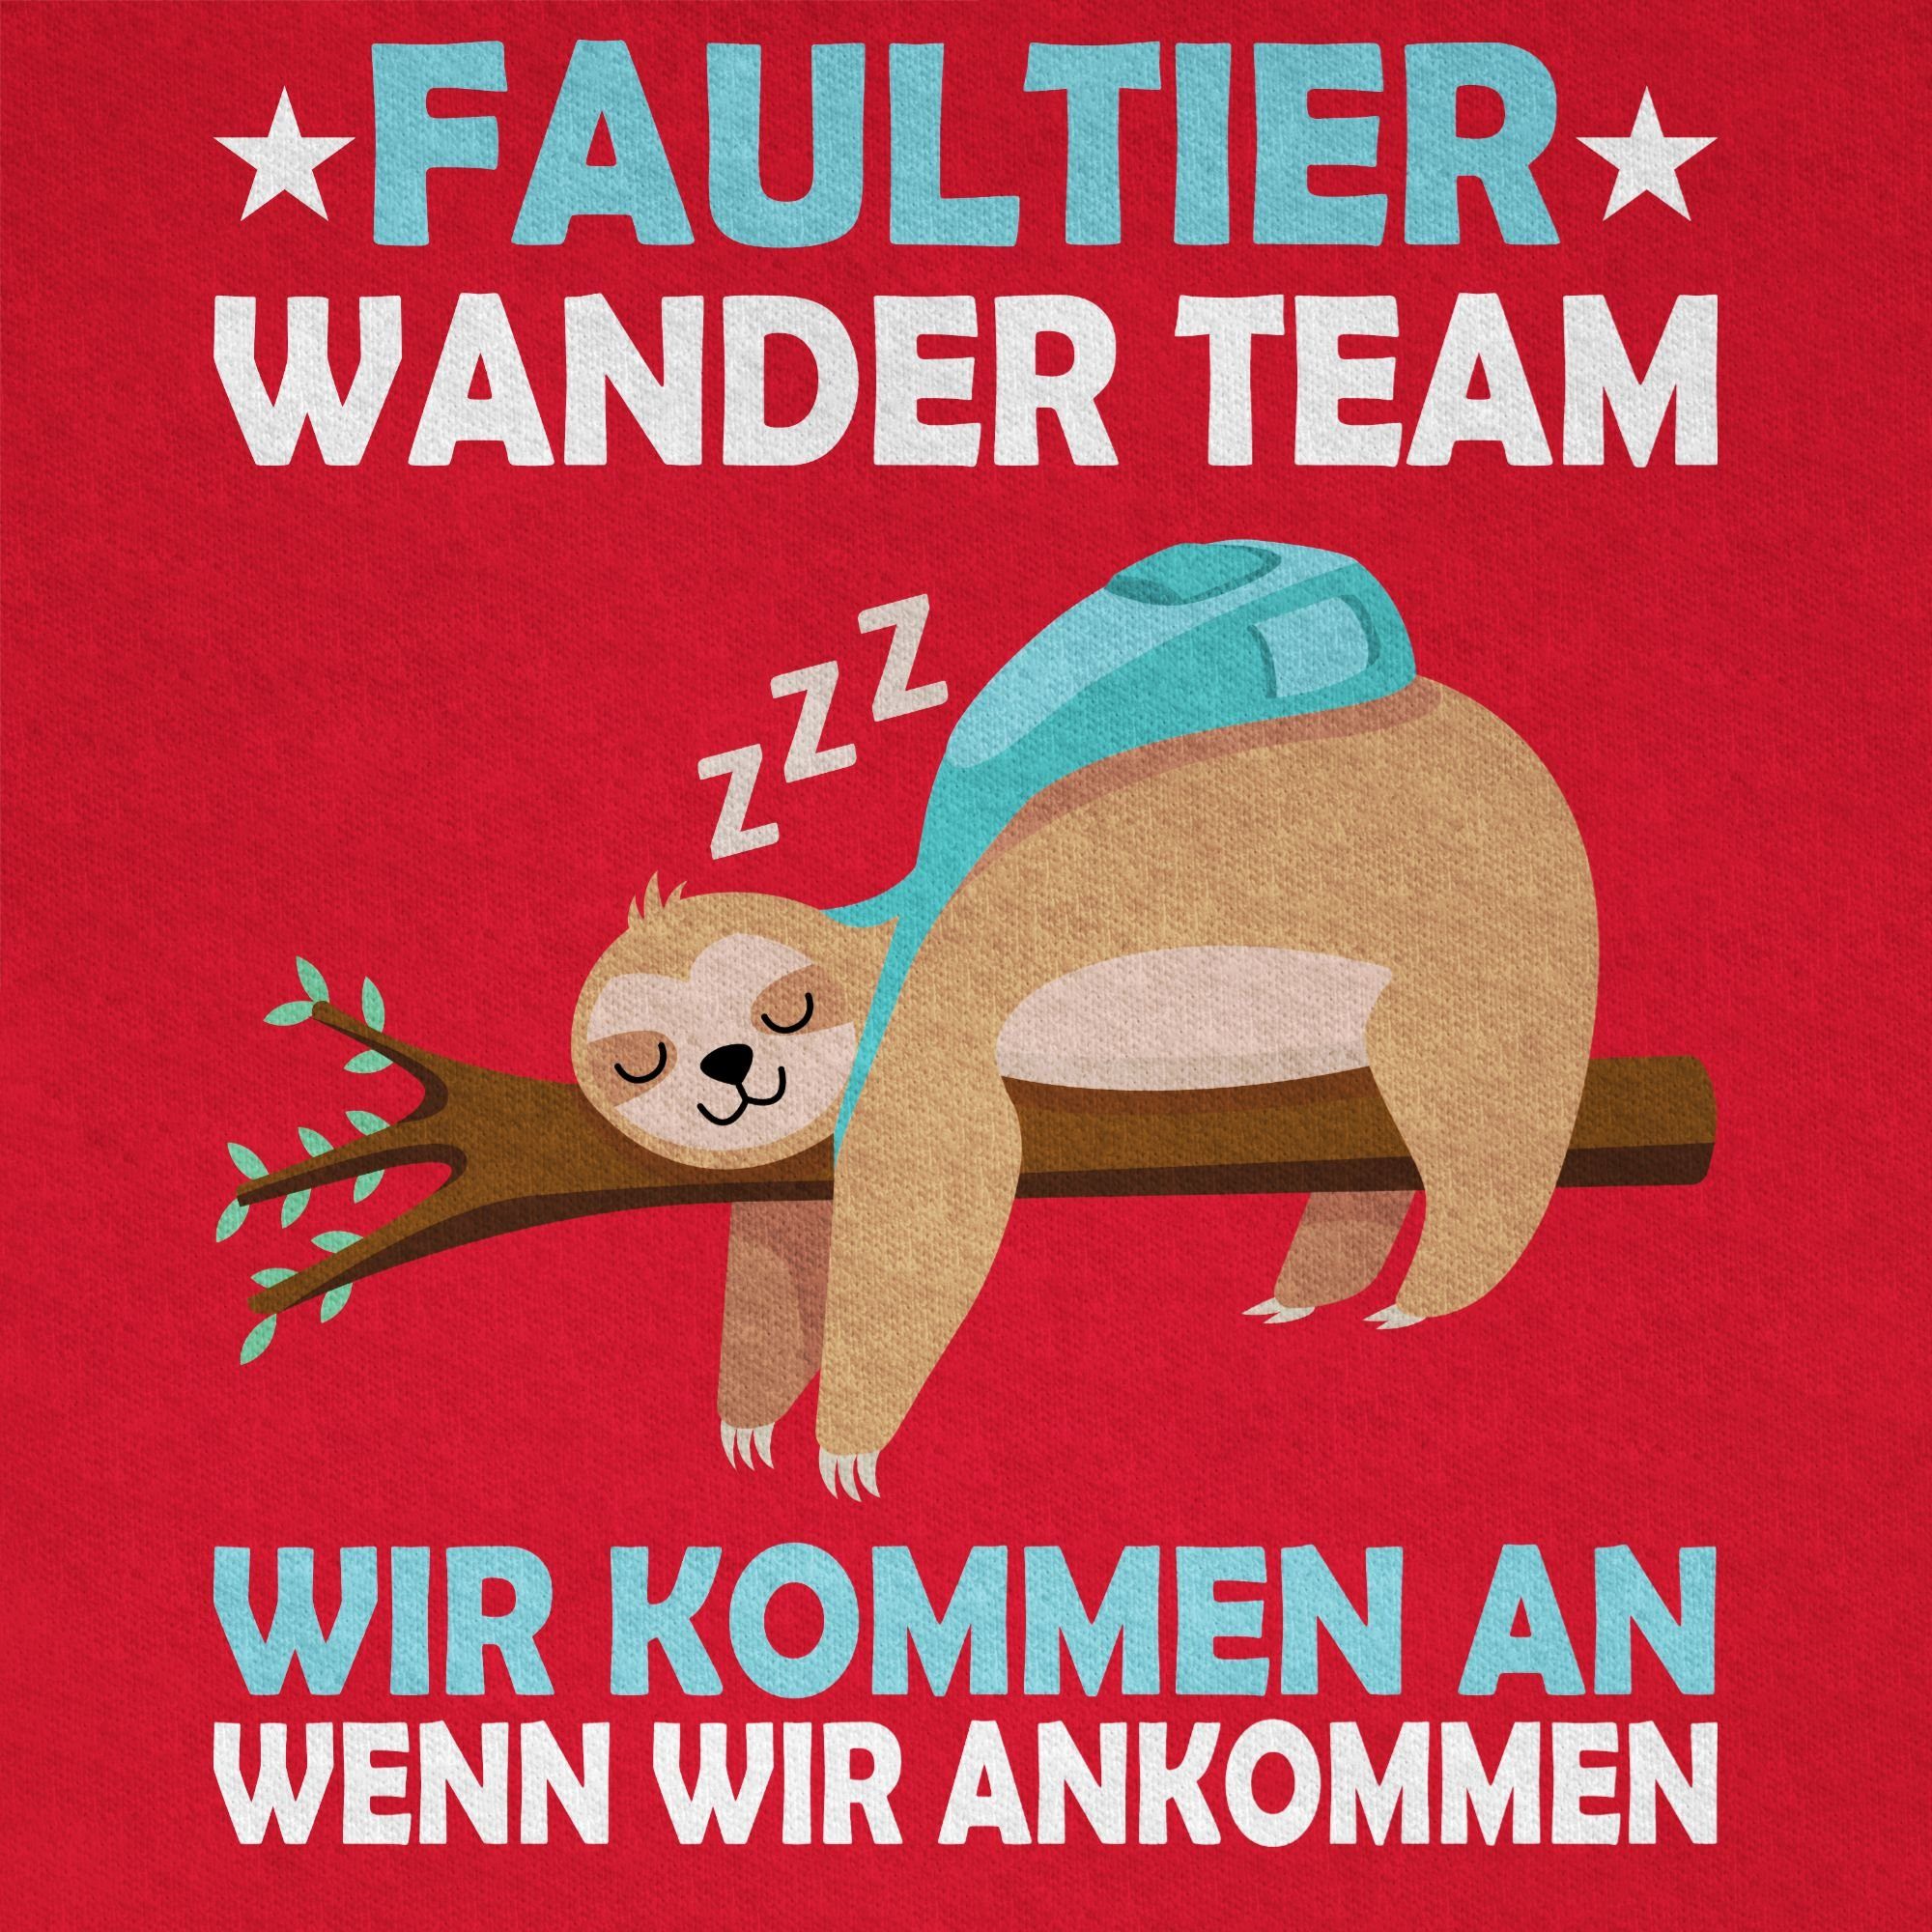 Rot Faultier Team Wander 3 Shirtracer T-Shirt Statement Sprüche Kinder Hiking